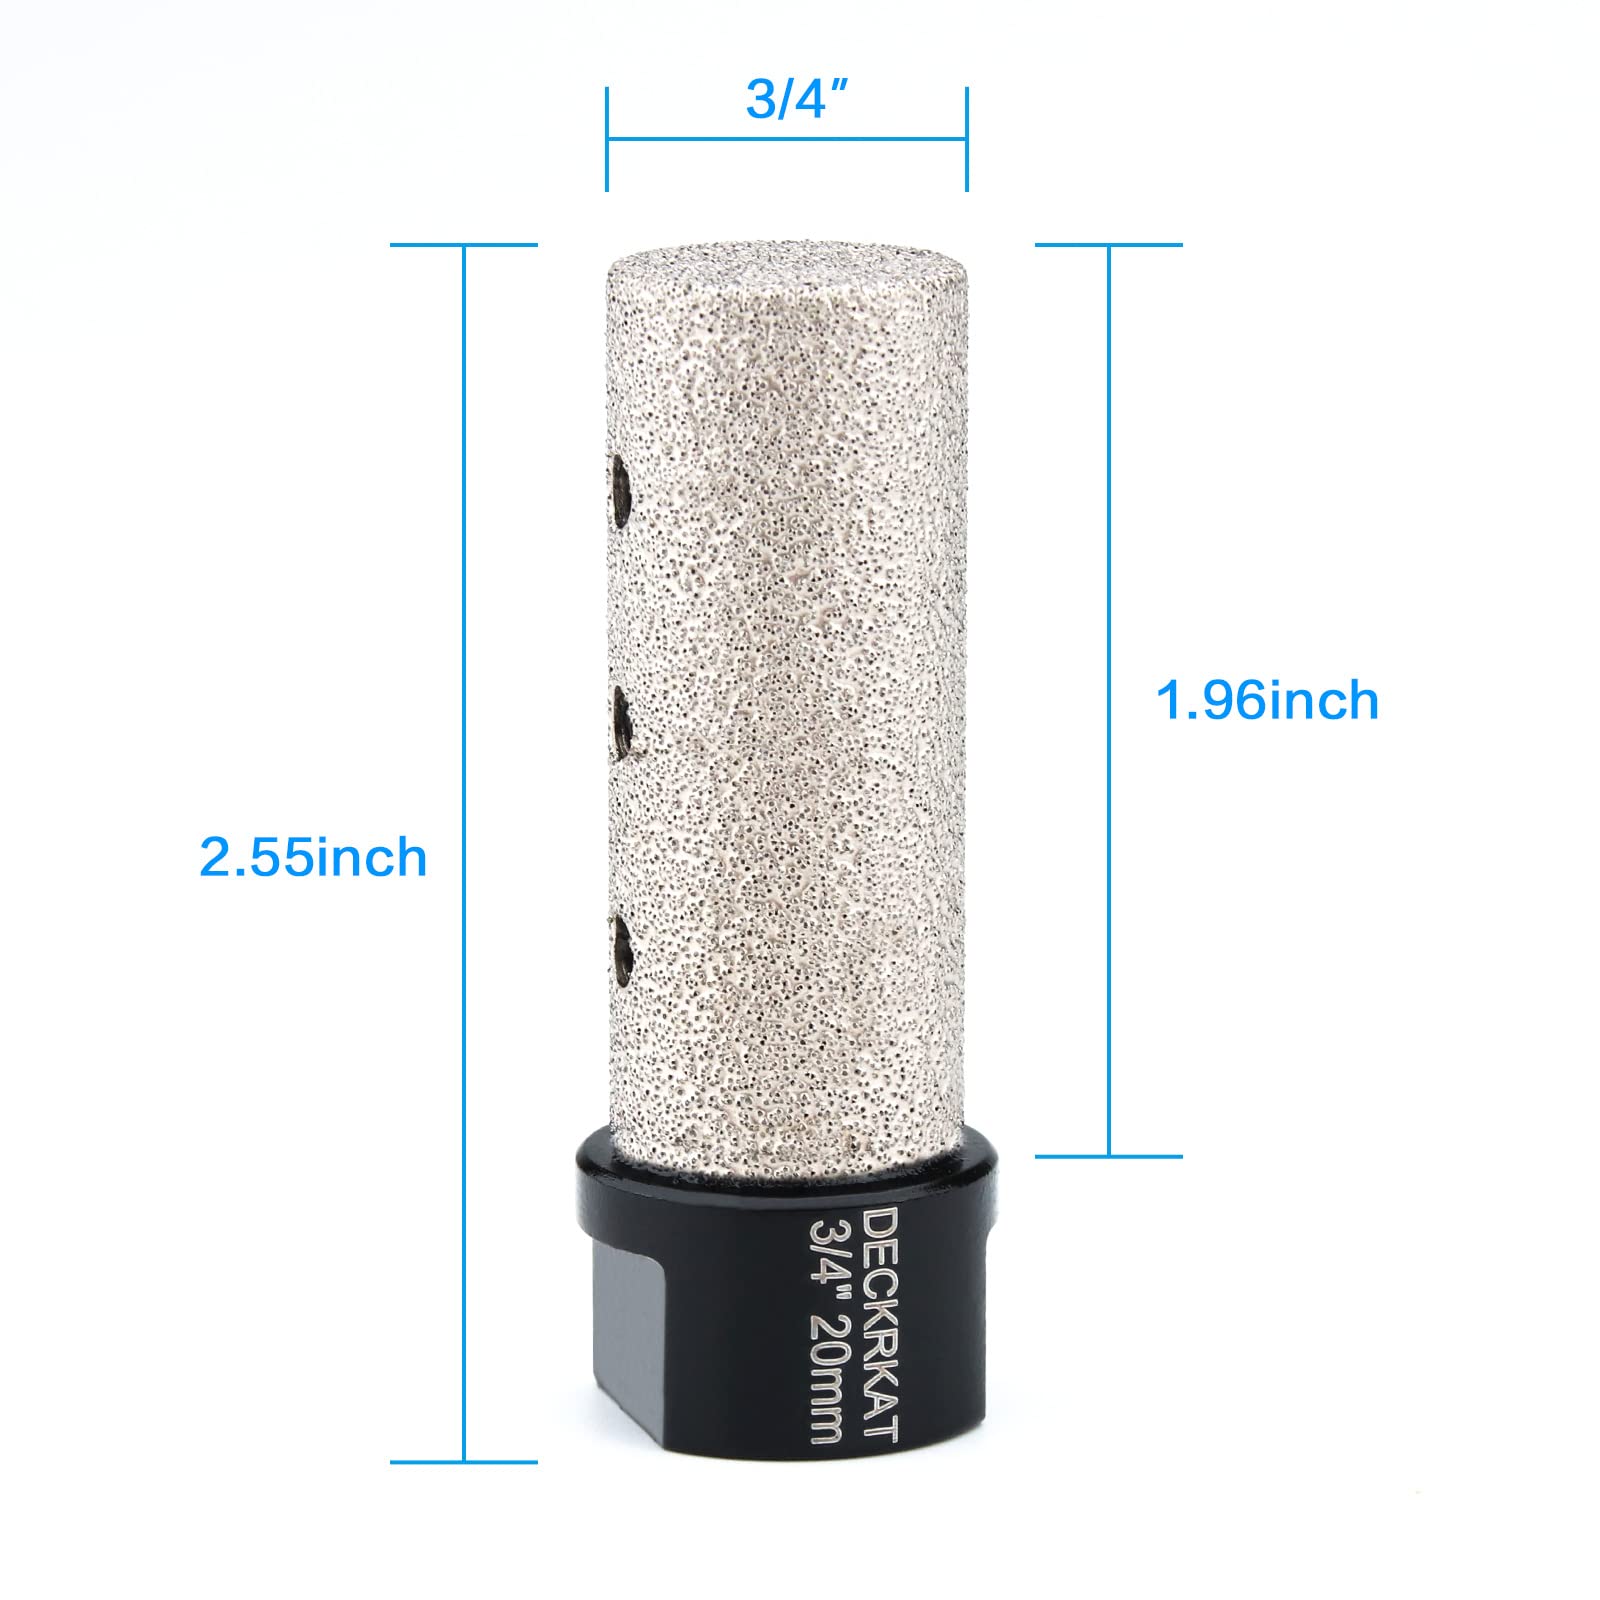 3/4 Inch Diamond Finger Milling Bit for Enlarging Shaping Holes, 5/8-11 Thread 20mm Dia Dry Core Drill Bits Vacuum Brazed Hole Reshaping Tool for Porcelain Tile Ceramic Marble Granite Counter Sink